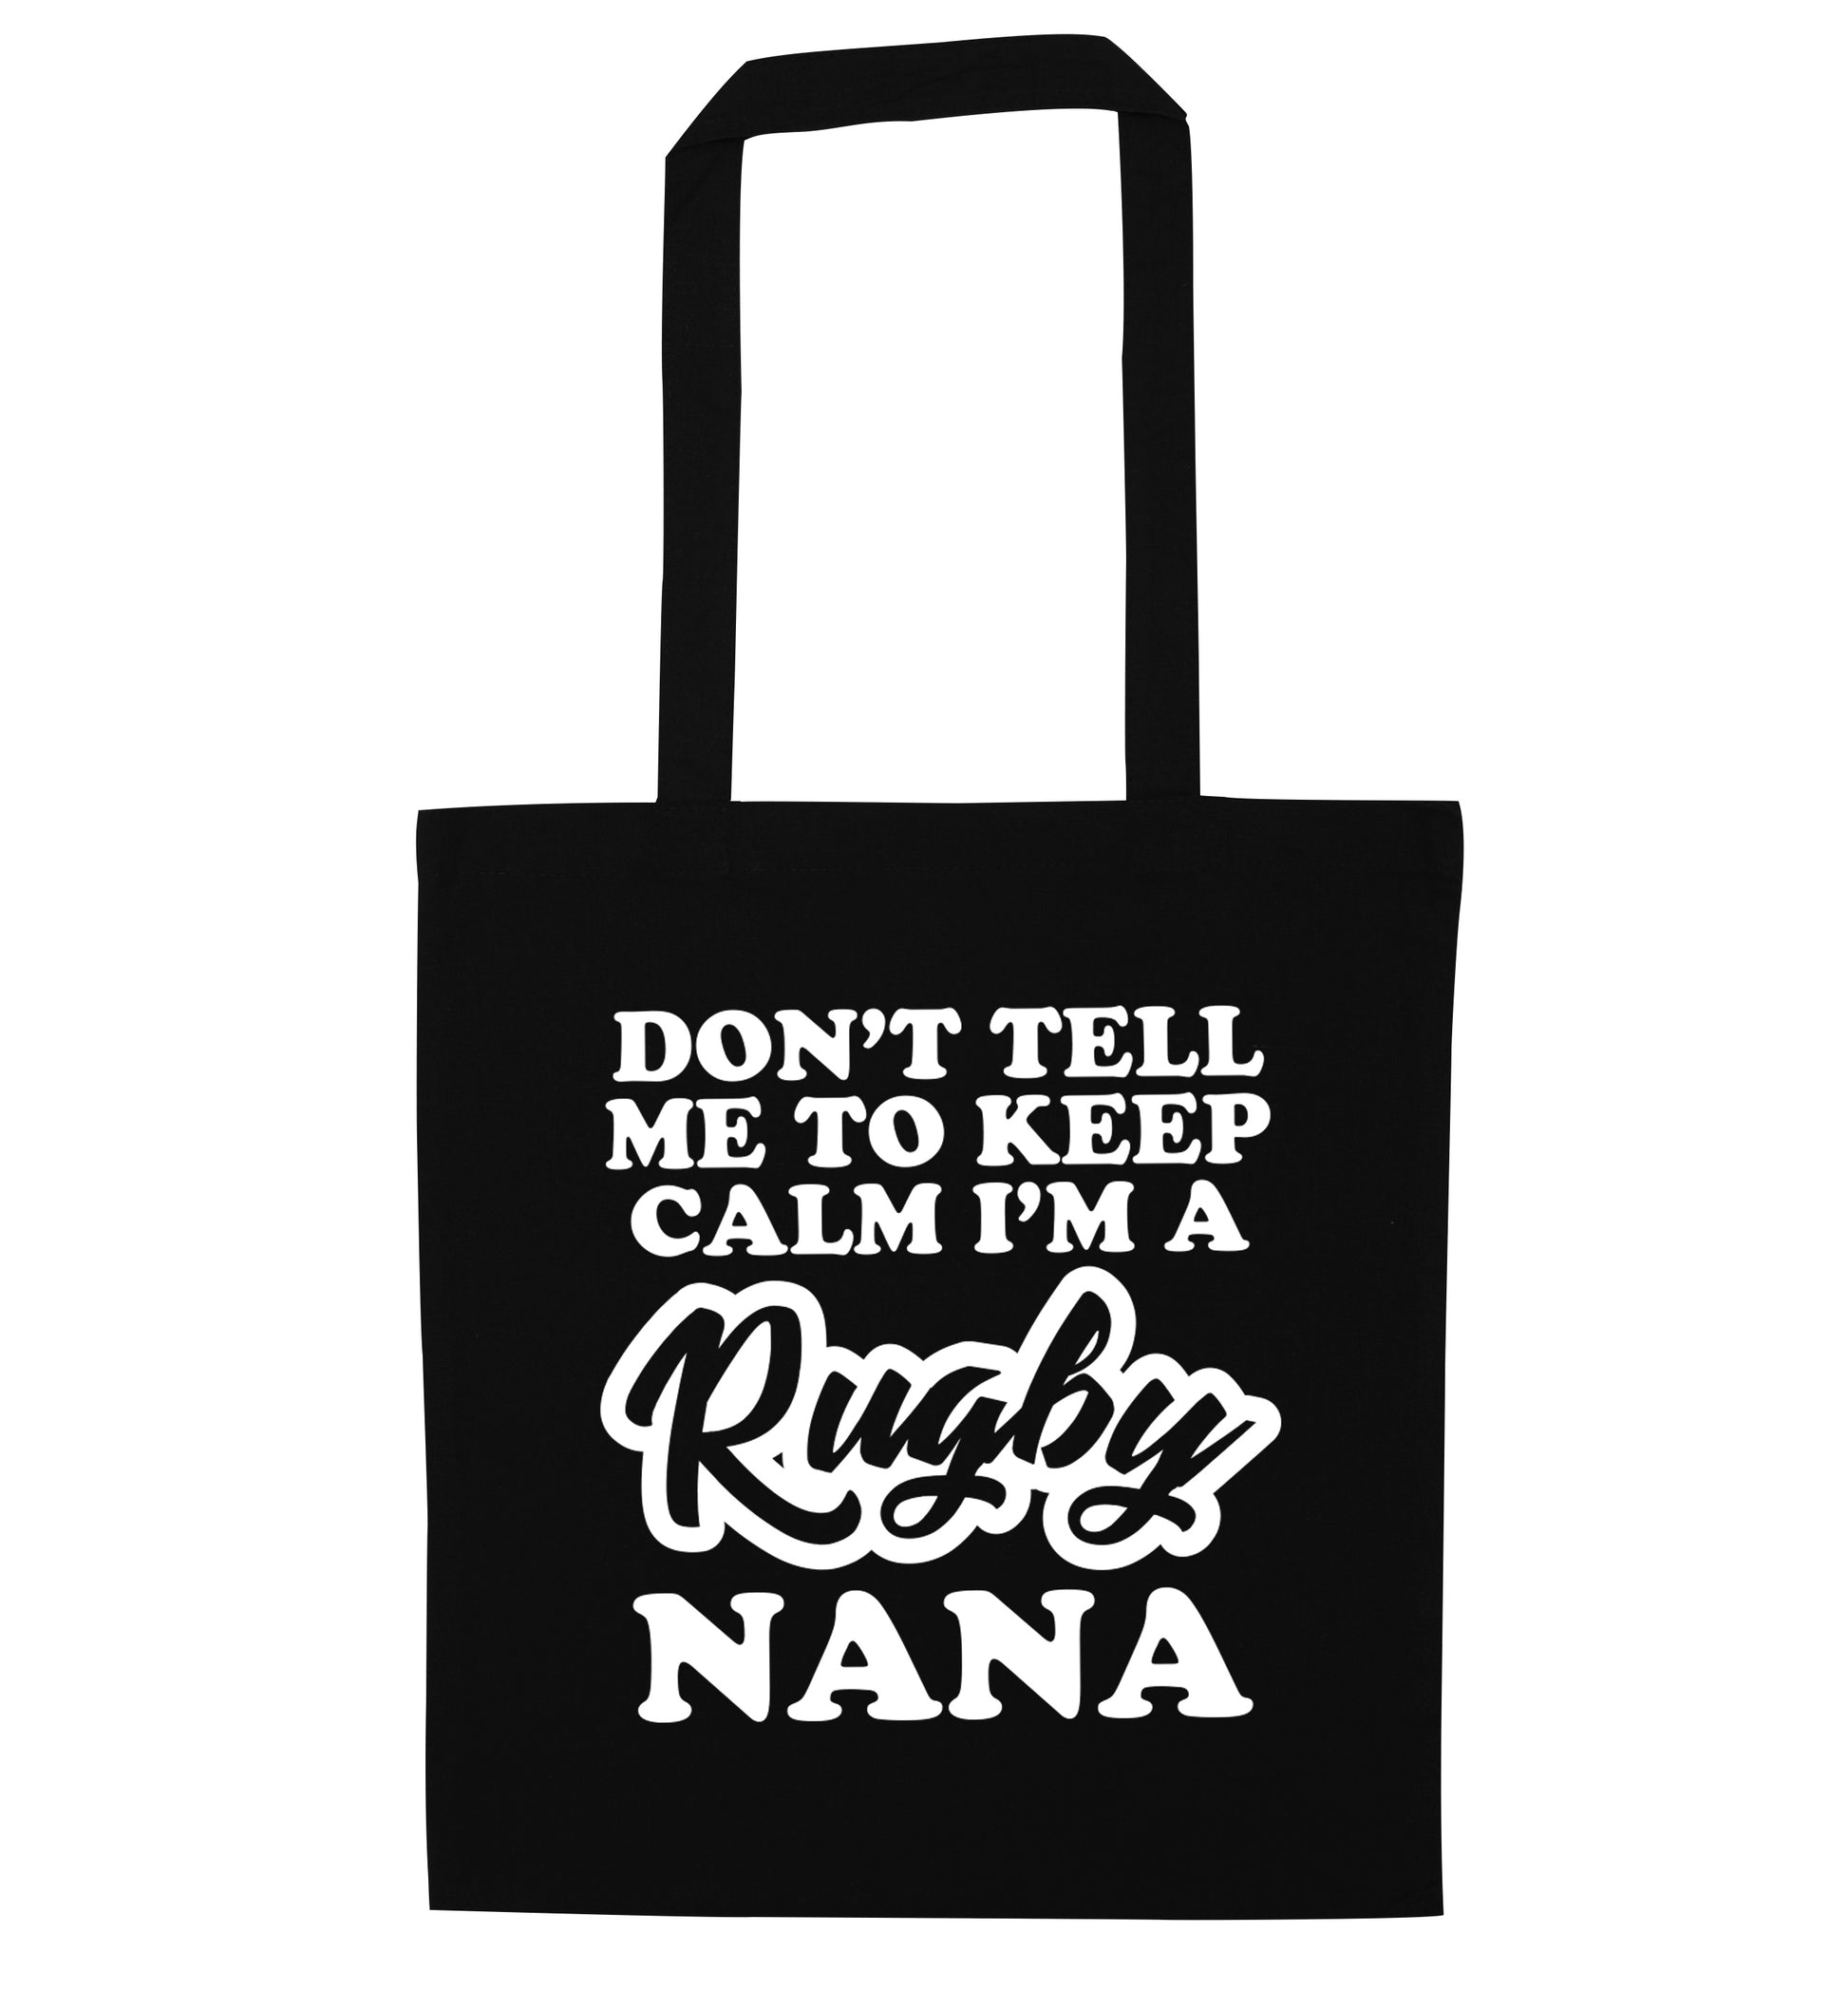 Don't tell me to keep calm I'm a rugby nana black tote bag